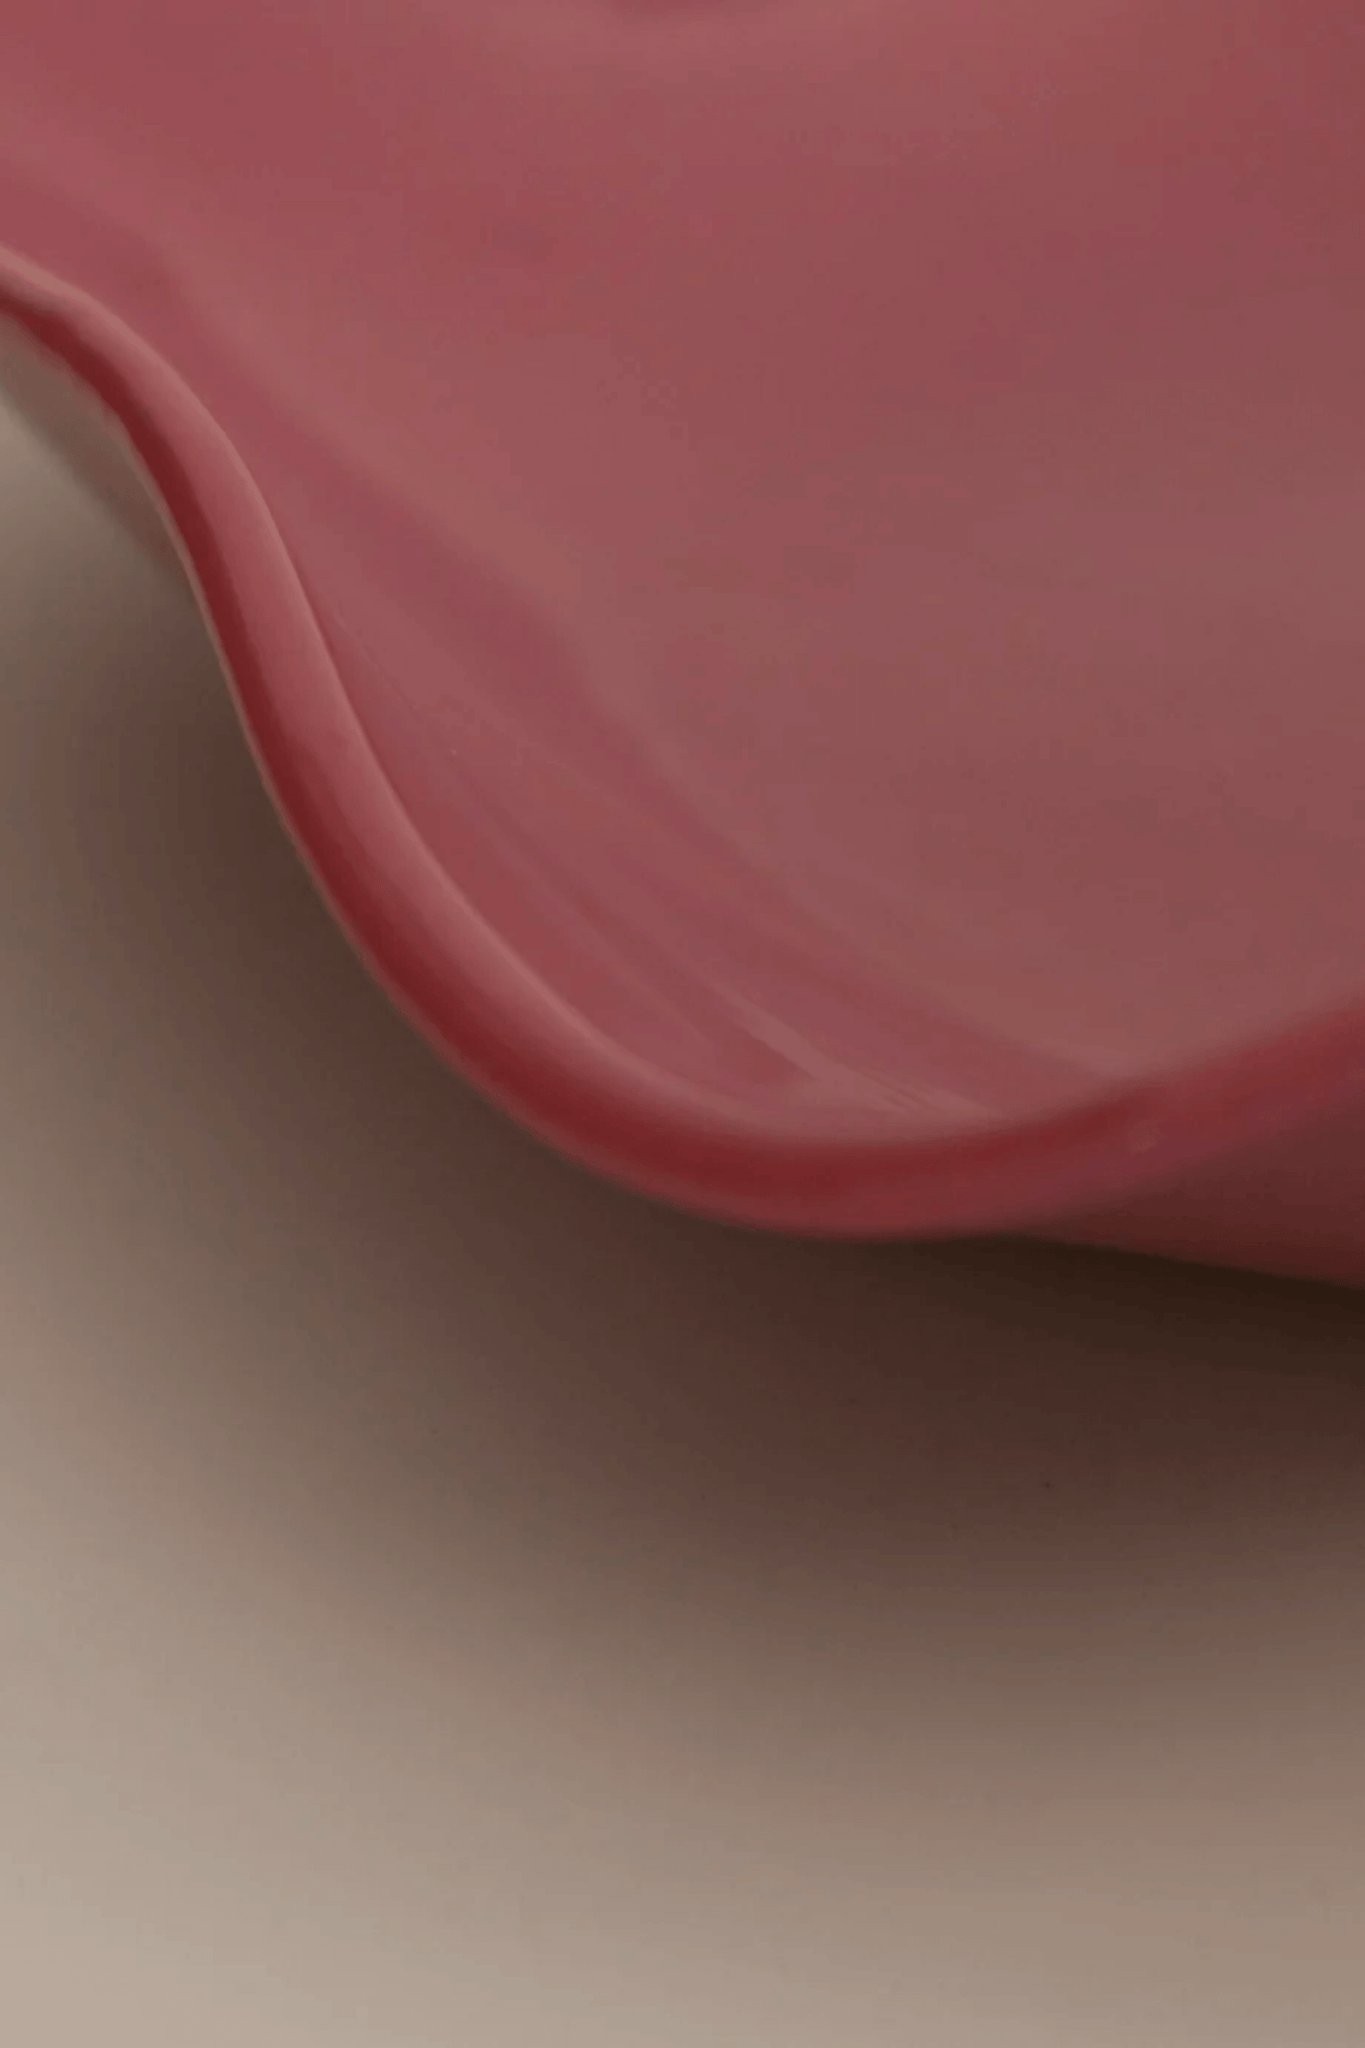 Small Rose Opaque Petal Plate Sophie Lou Jacobsen, detail view